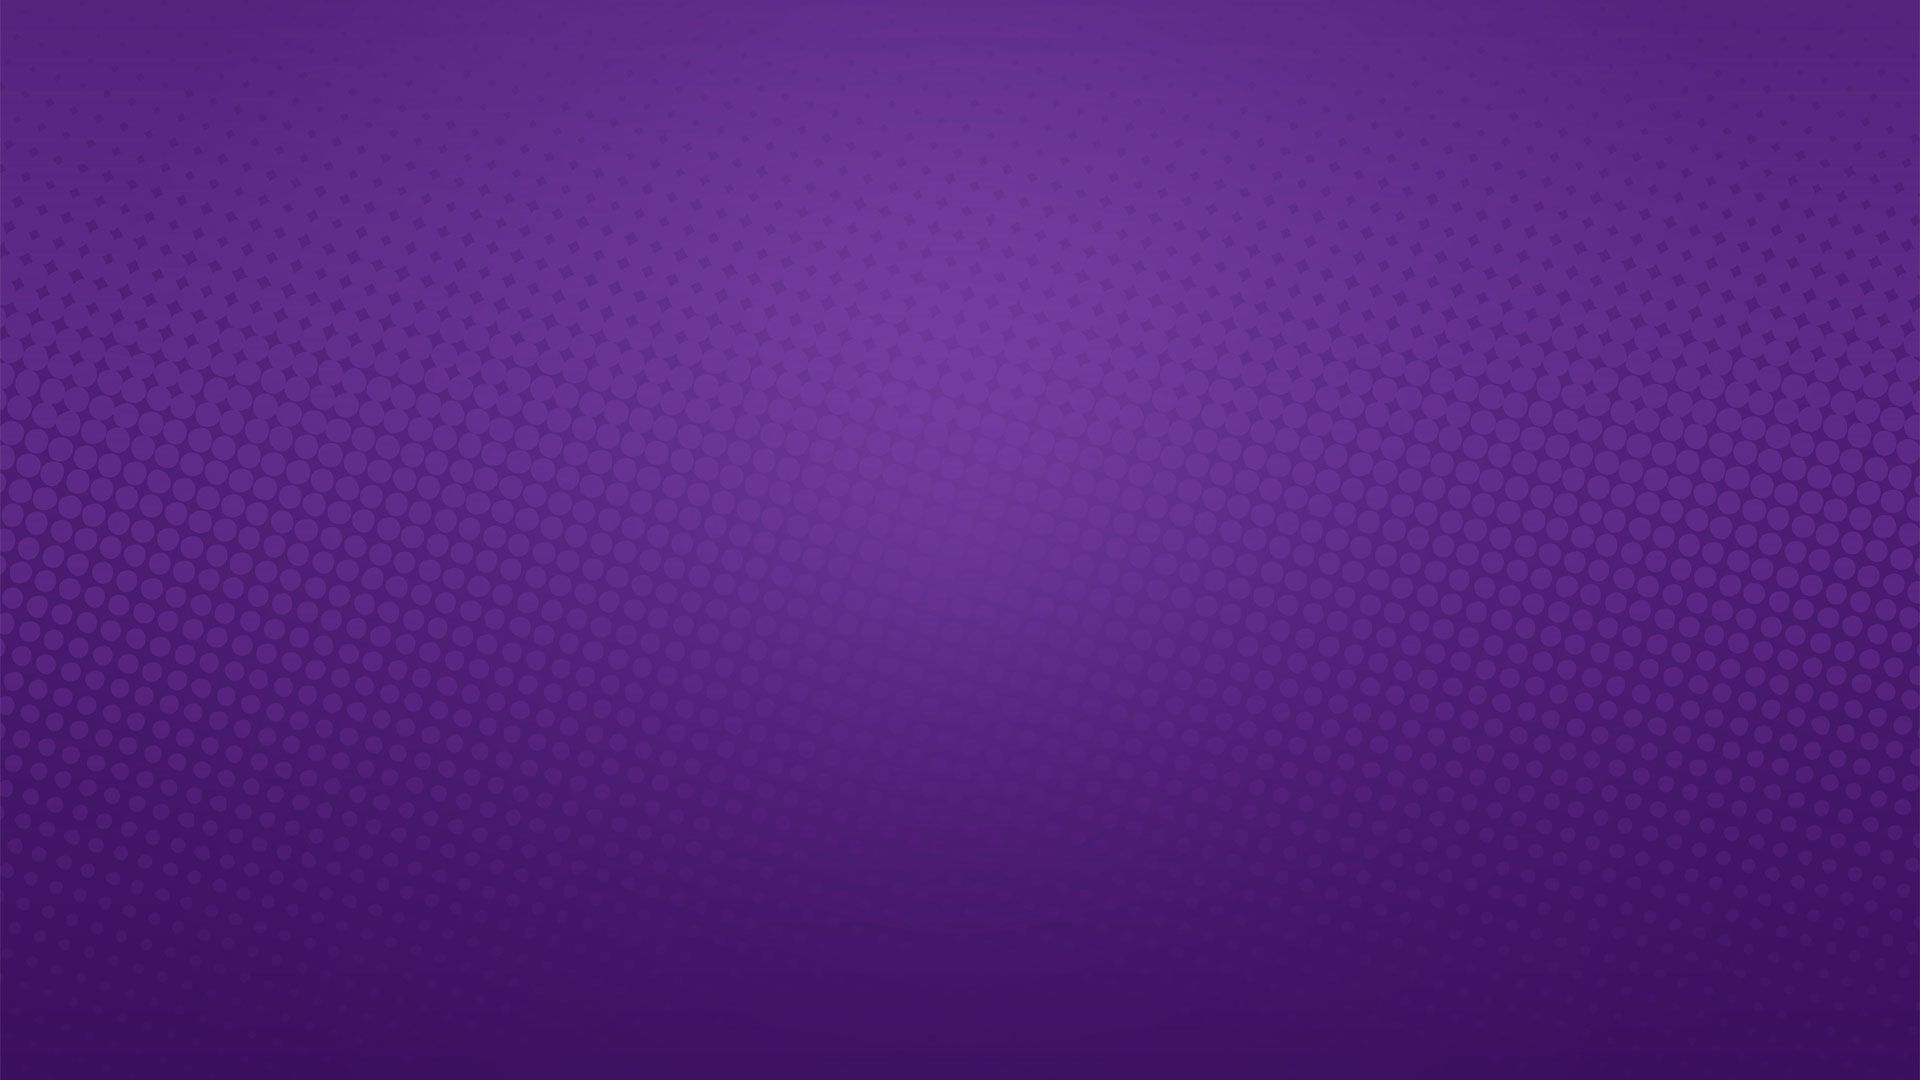 Dark Purple download wallpaper image